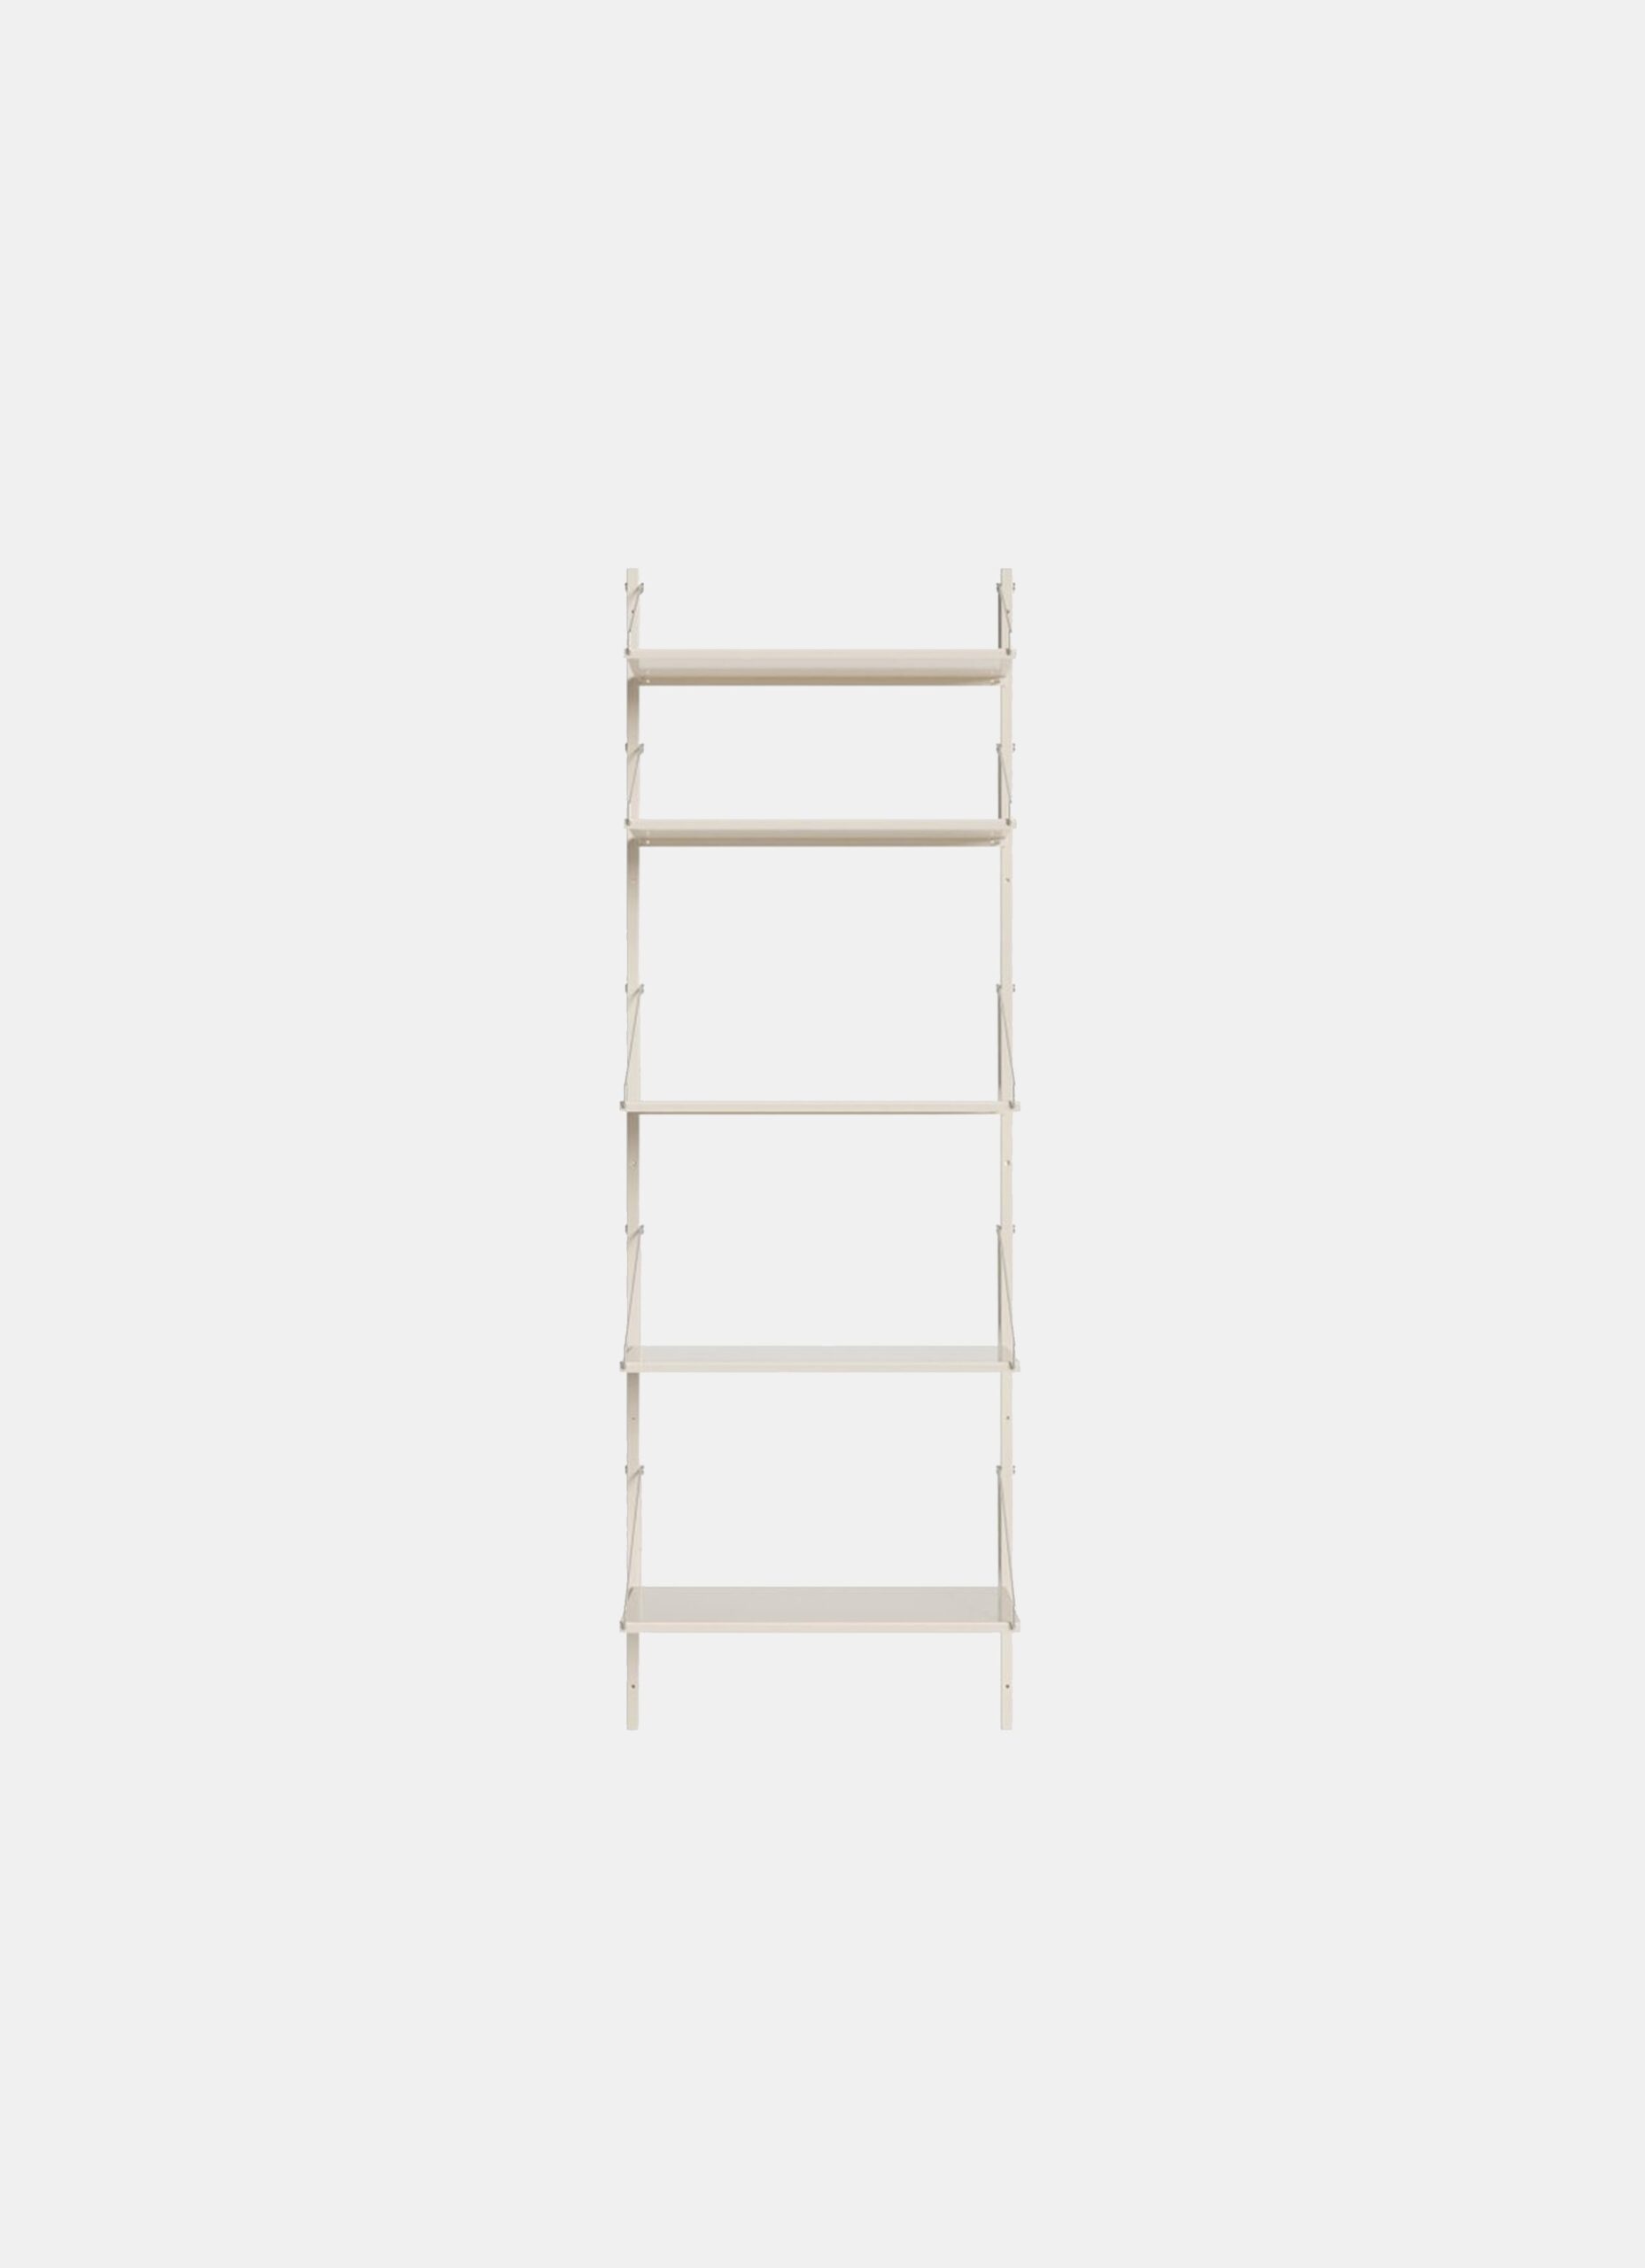 Frama - Shelf Library - Warm White Steel - H1852/W60 - Single Section